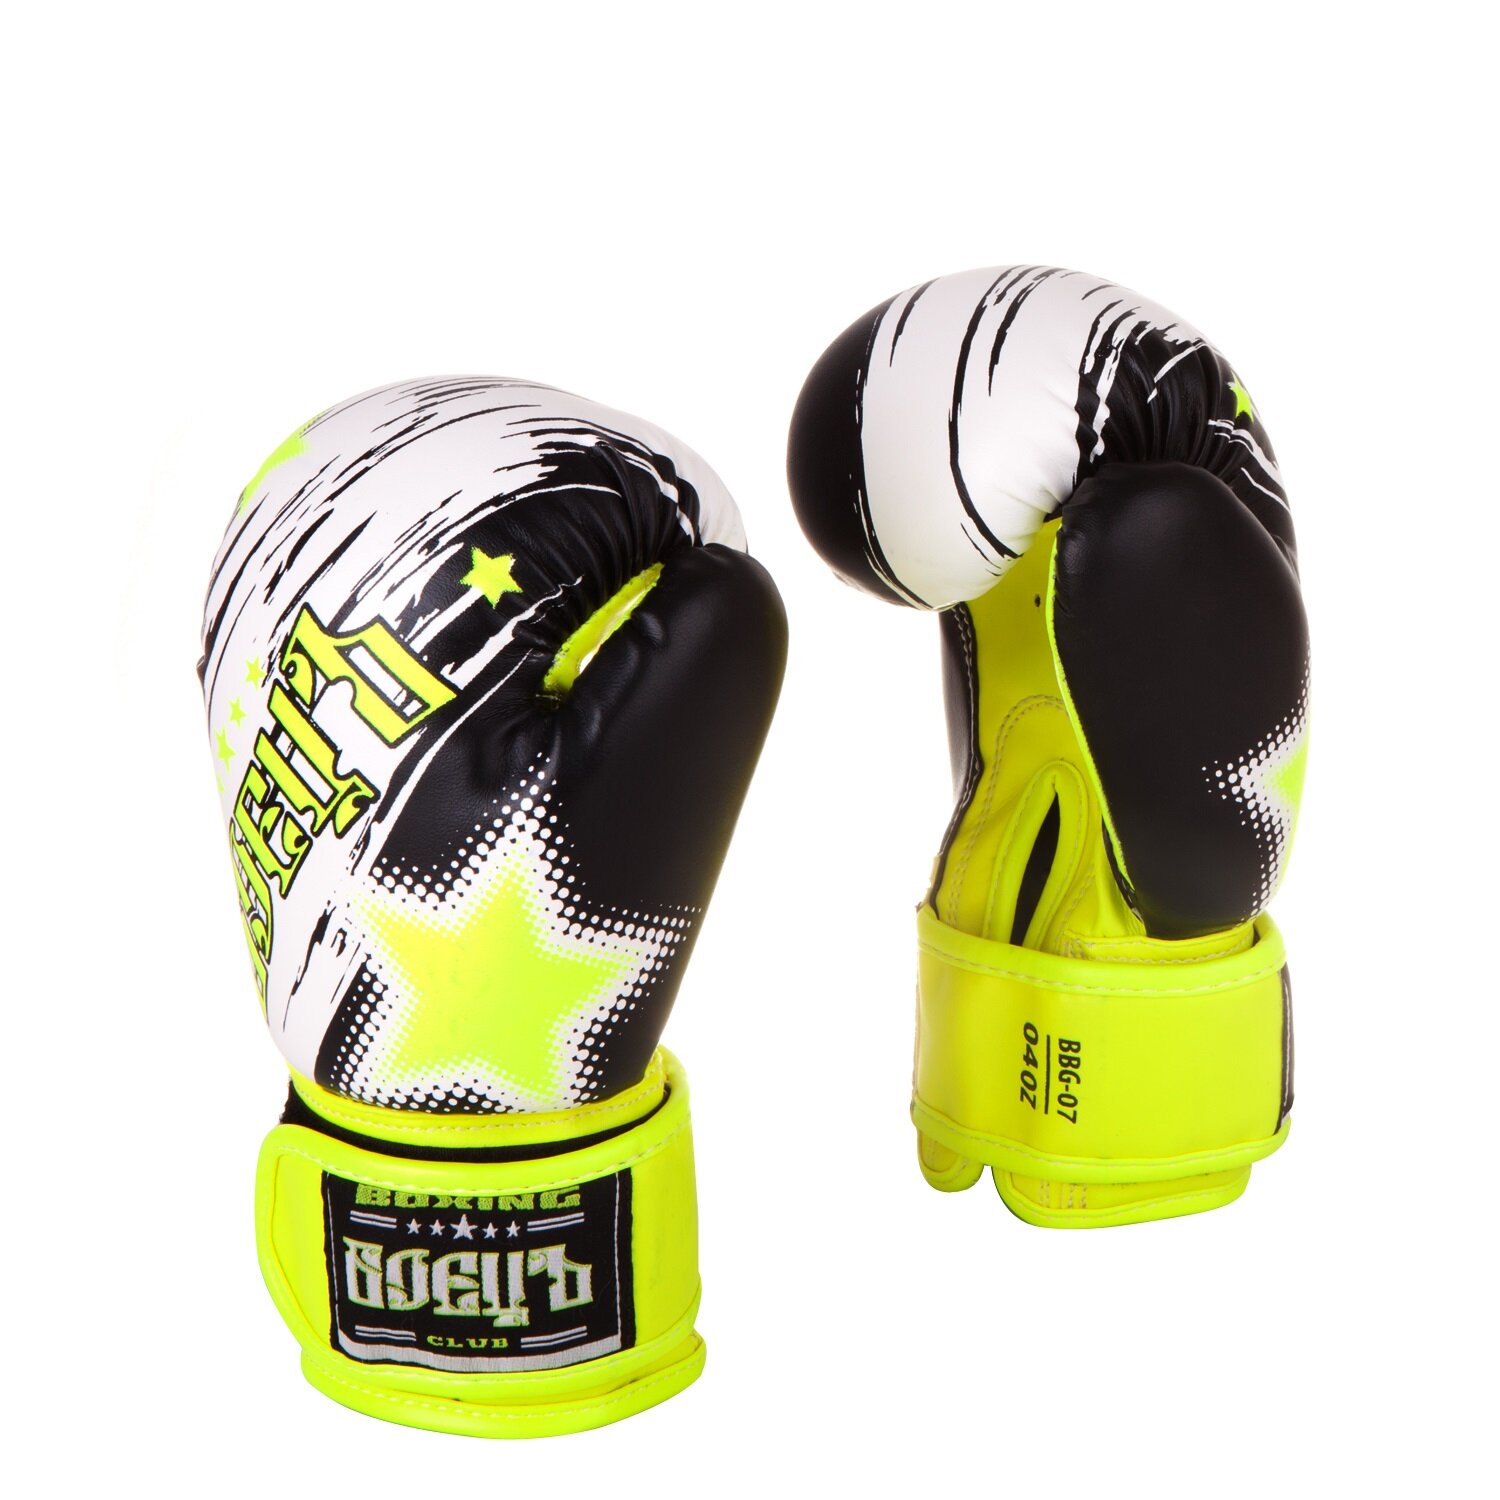 Боксерские перчатки боецъ Bbg-07 зеленые размер 2 oz